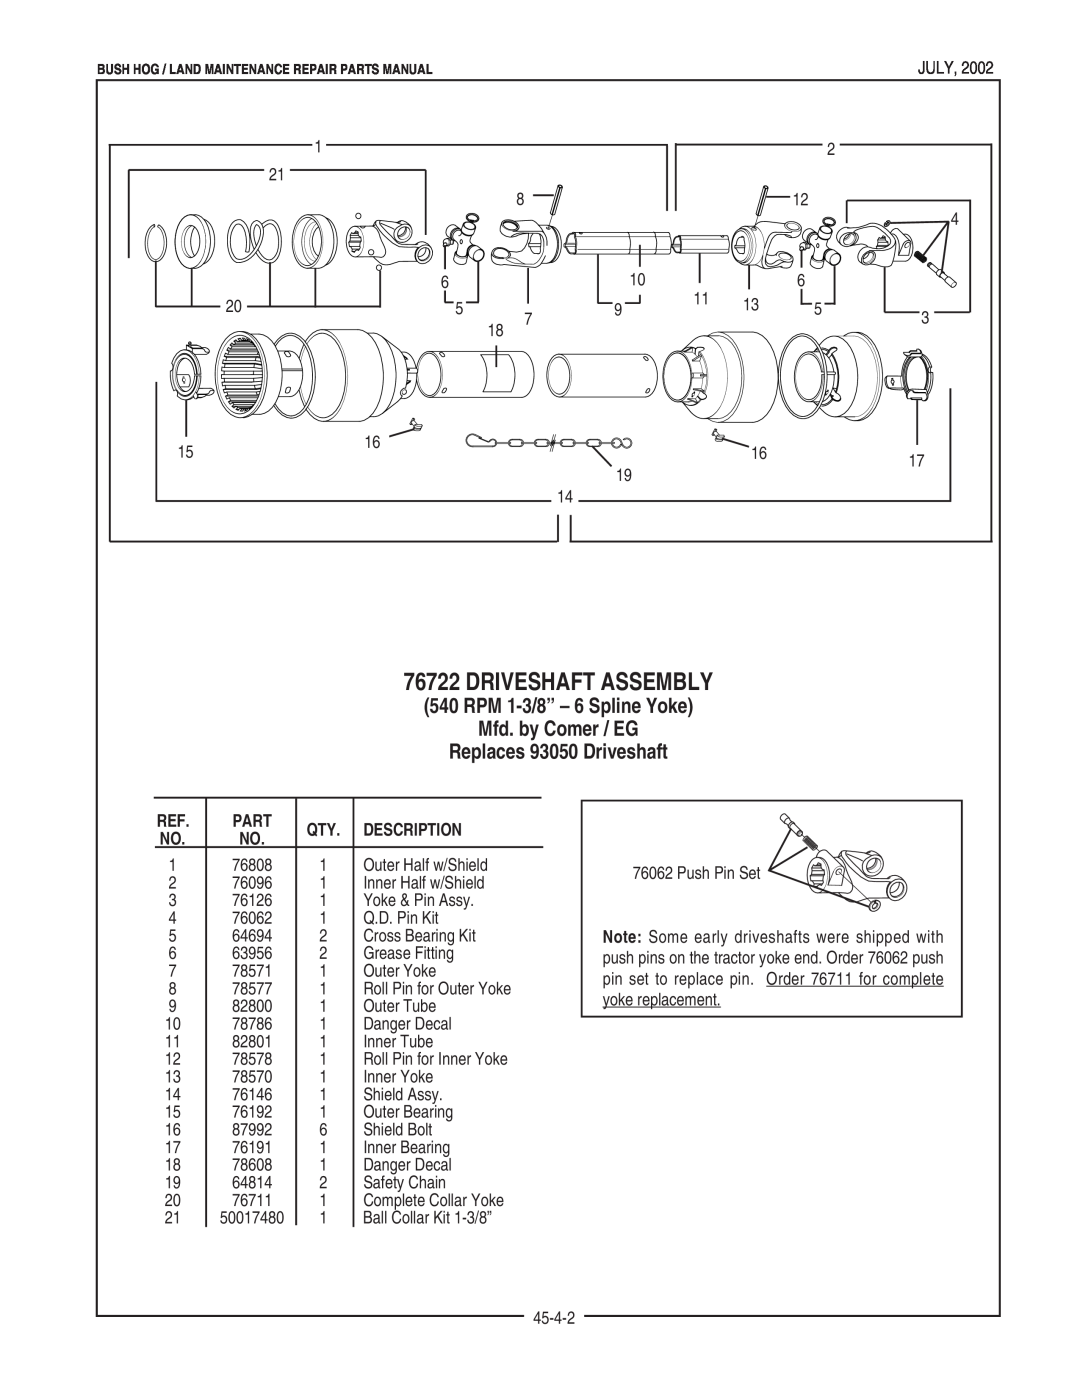 Bush Hog FTH 480 manual Driveshaft Assembly, RPM 1-3/8” - 6 Spline Yoke Mfd. by Comer / EG, Replaces 93050 Driveshaft, Part 